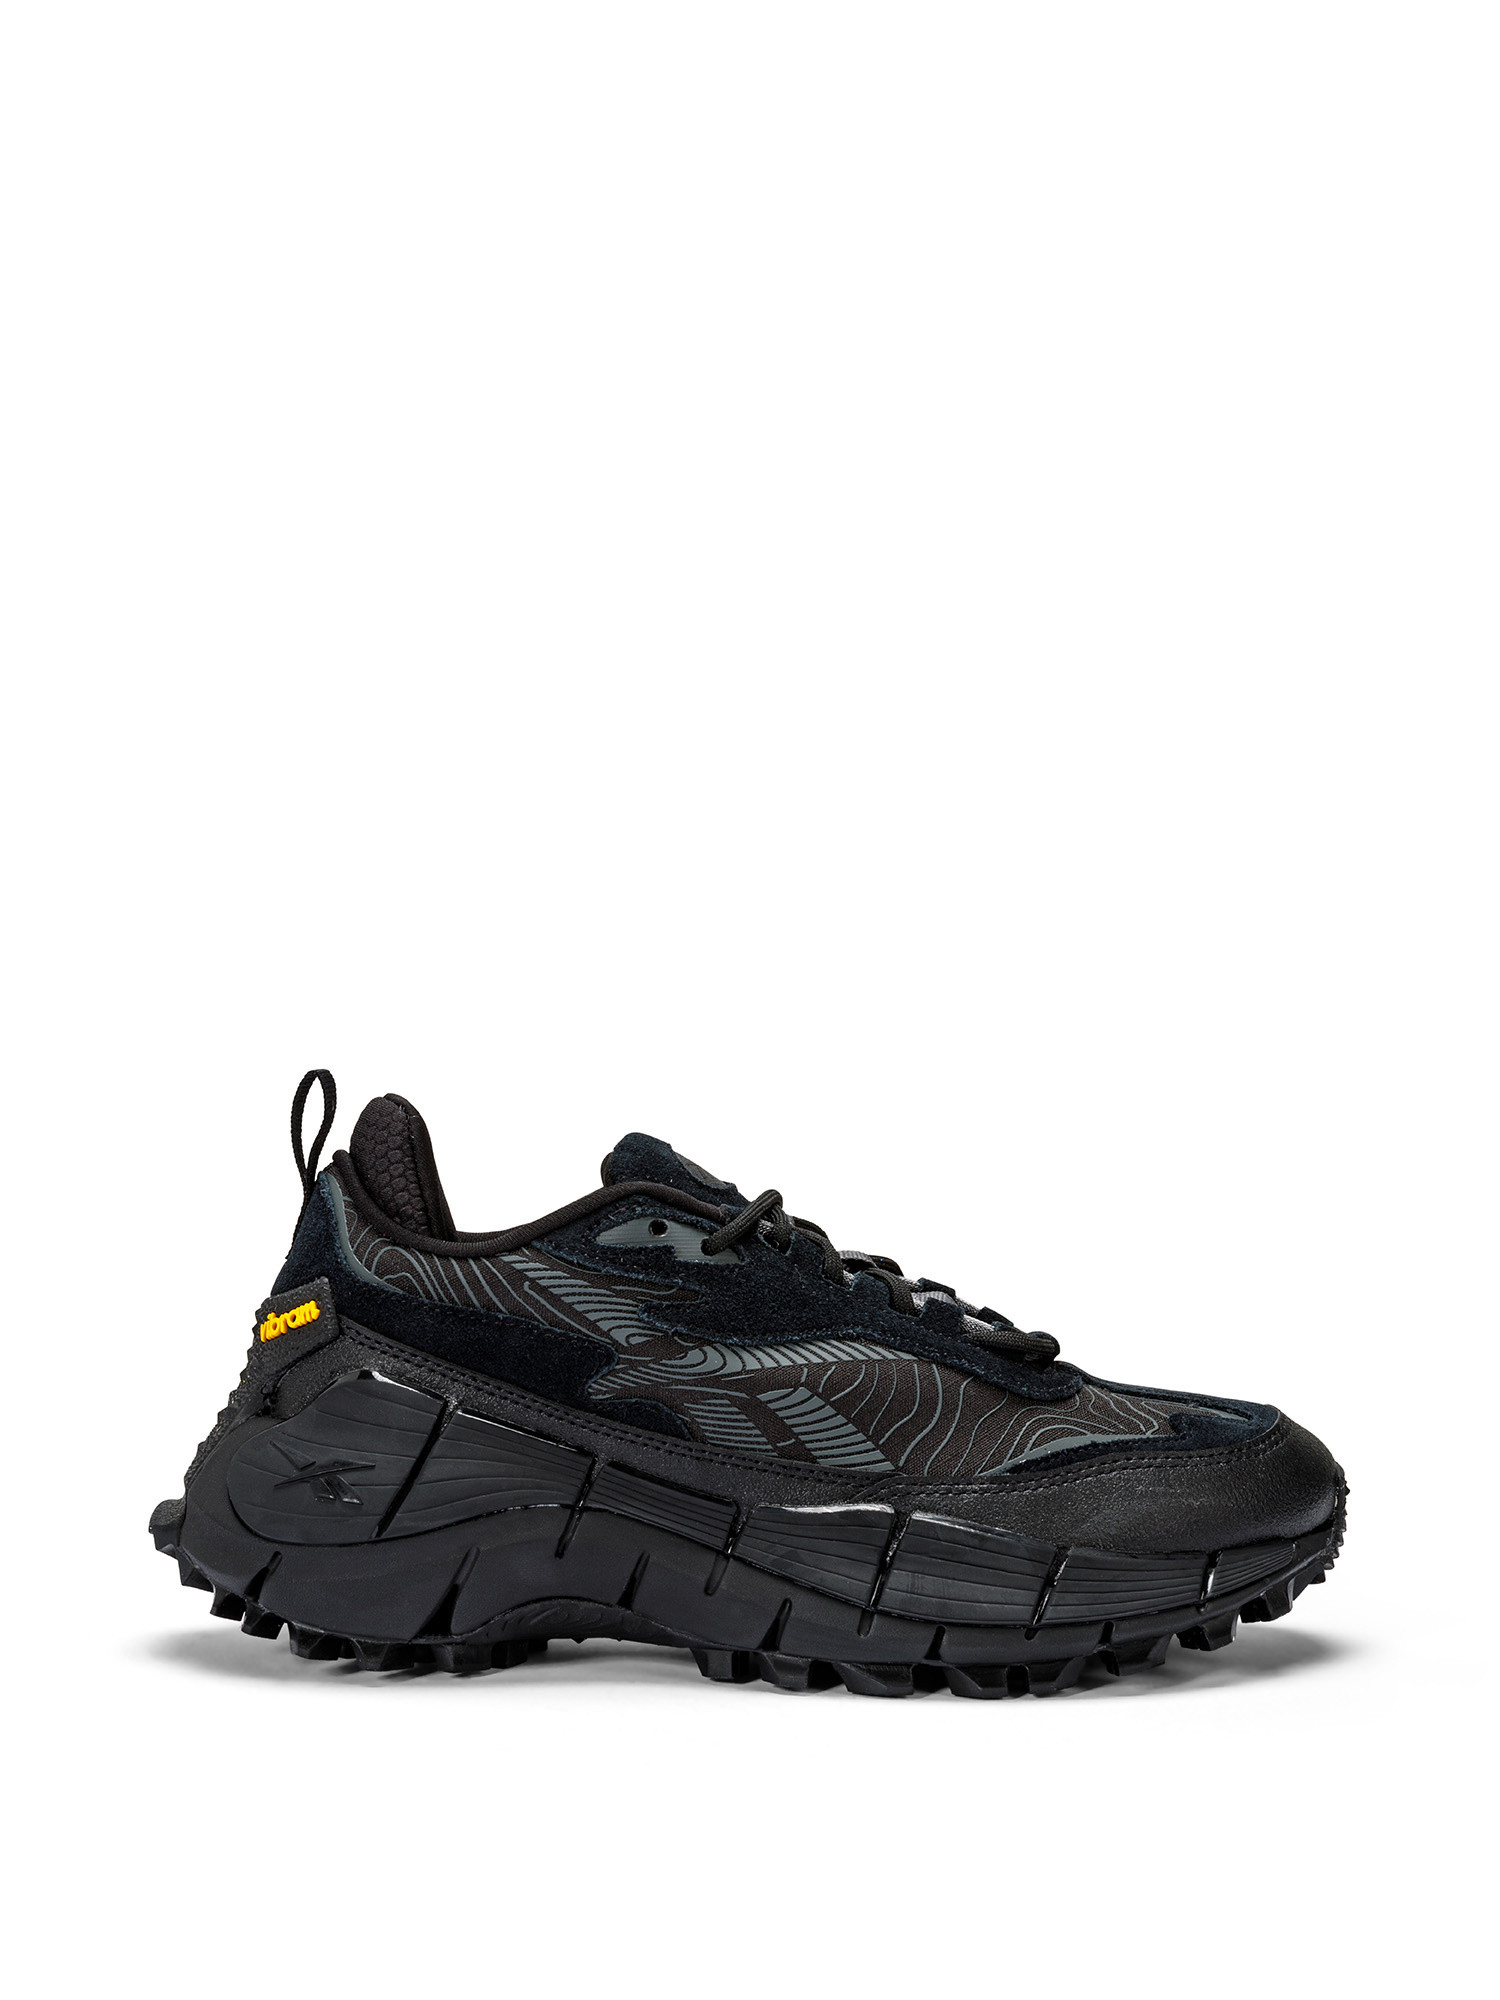 Reebok - Zig Kinetica 2.5 Edge Shoes, Black, large image number 0